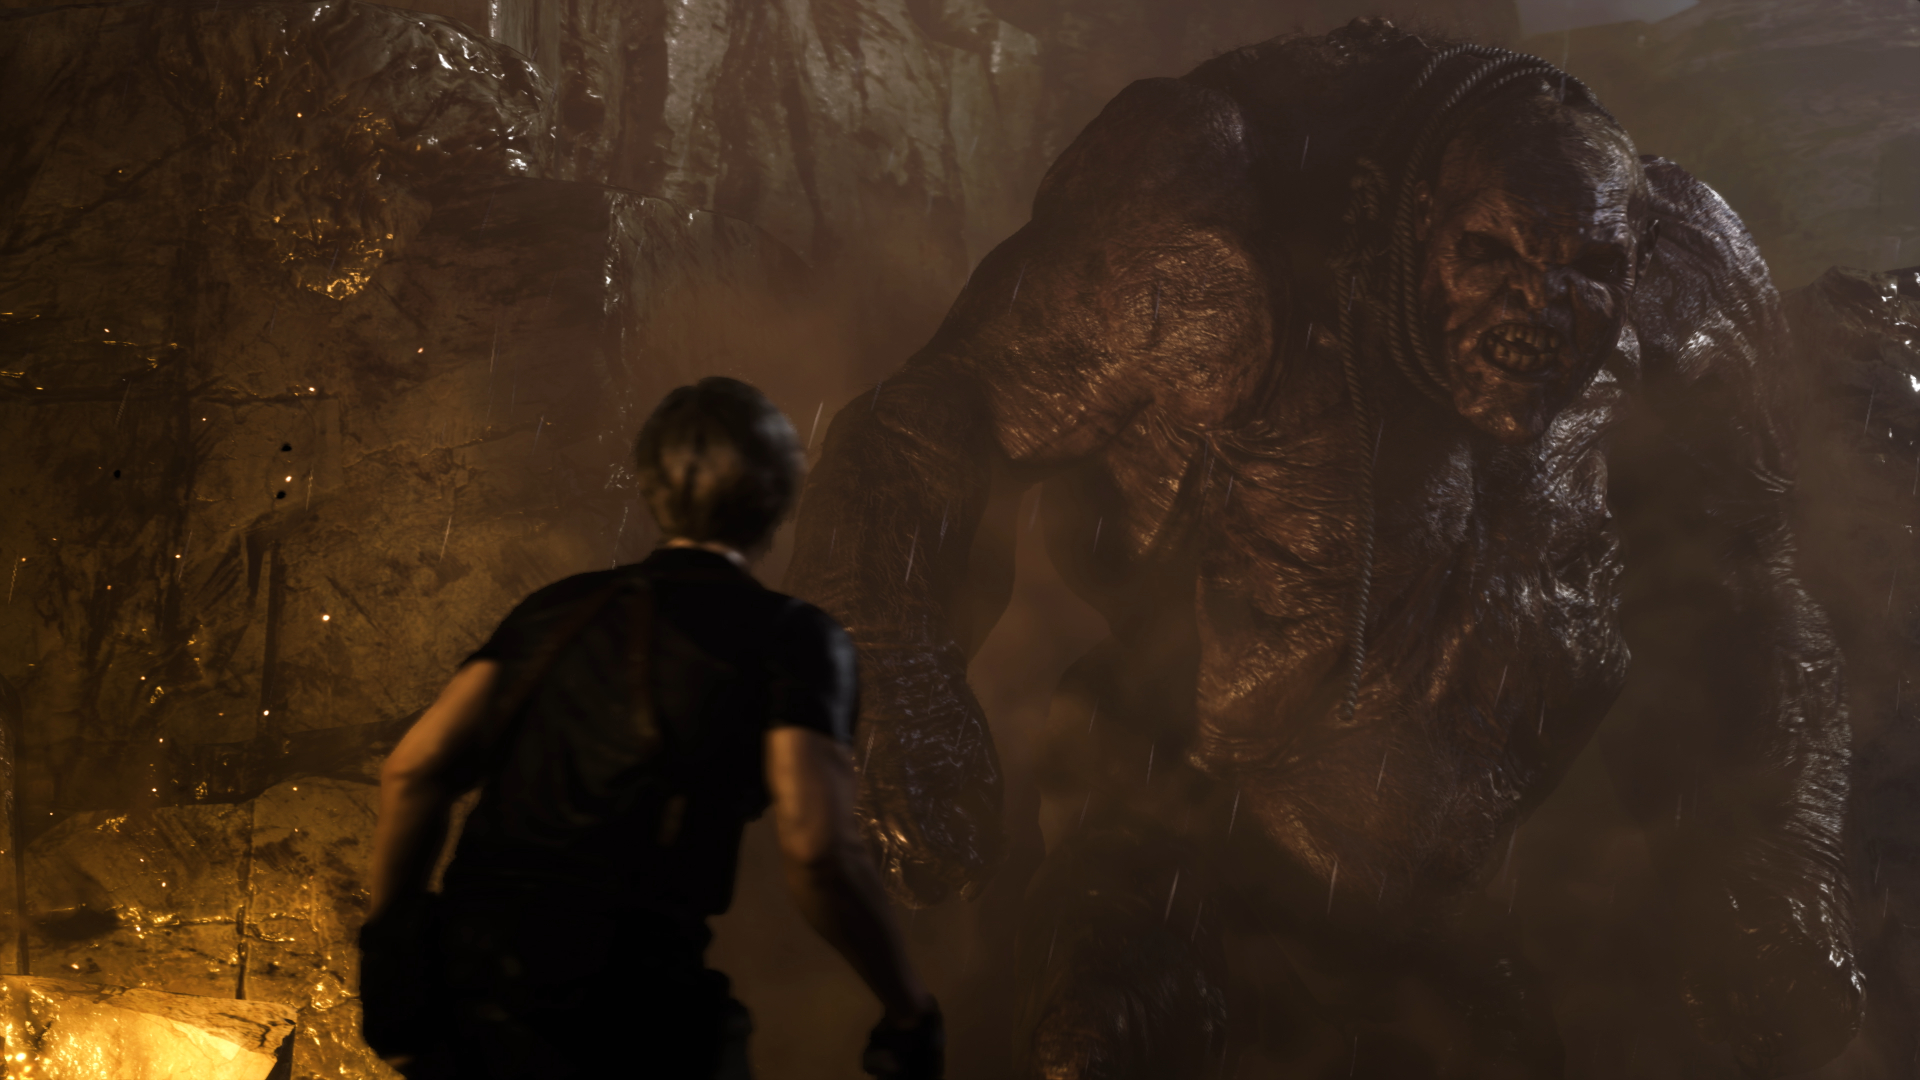 Resident Evil 4 Leon facing El Gigante boss